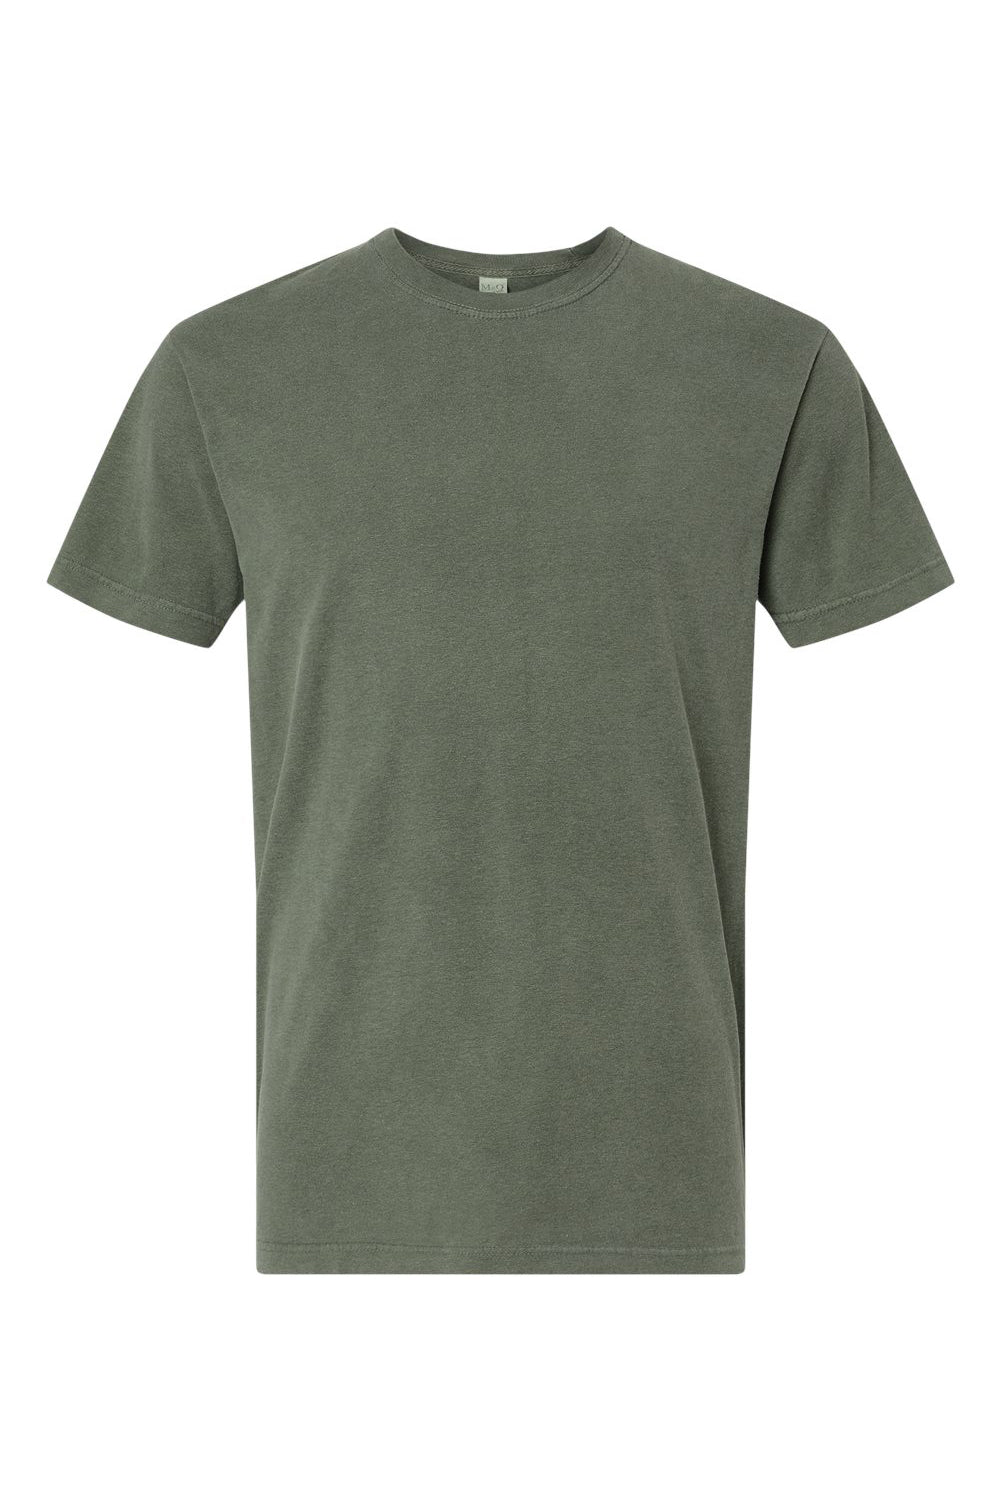 M&O 6500M Mens Vintage Garment Dyed Short Sleeve Crewneck T-Shirt Monterey Sage Green Flat Front